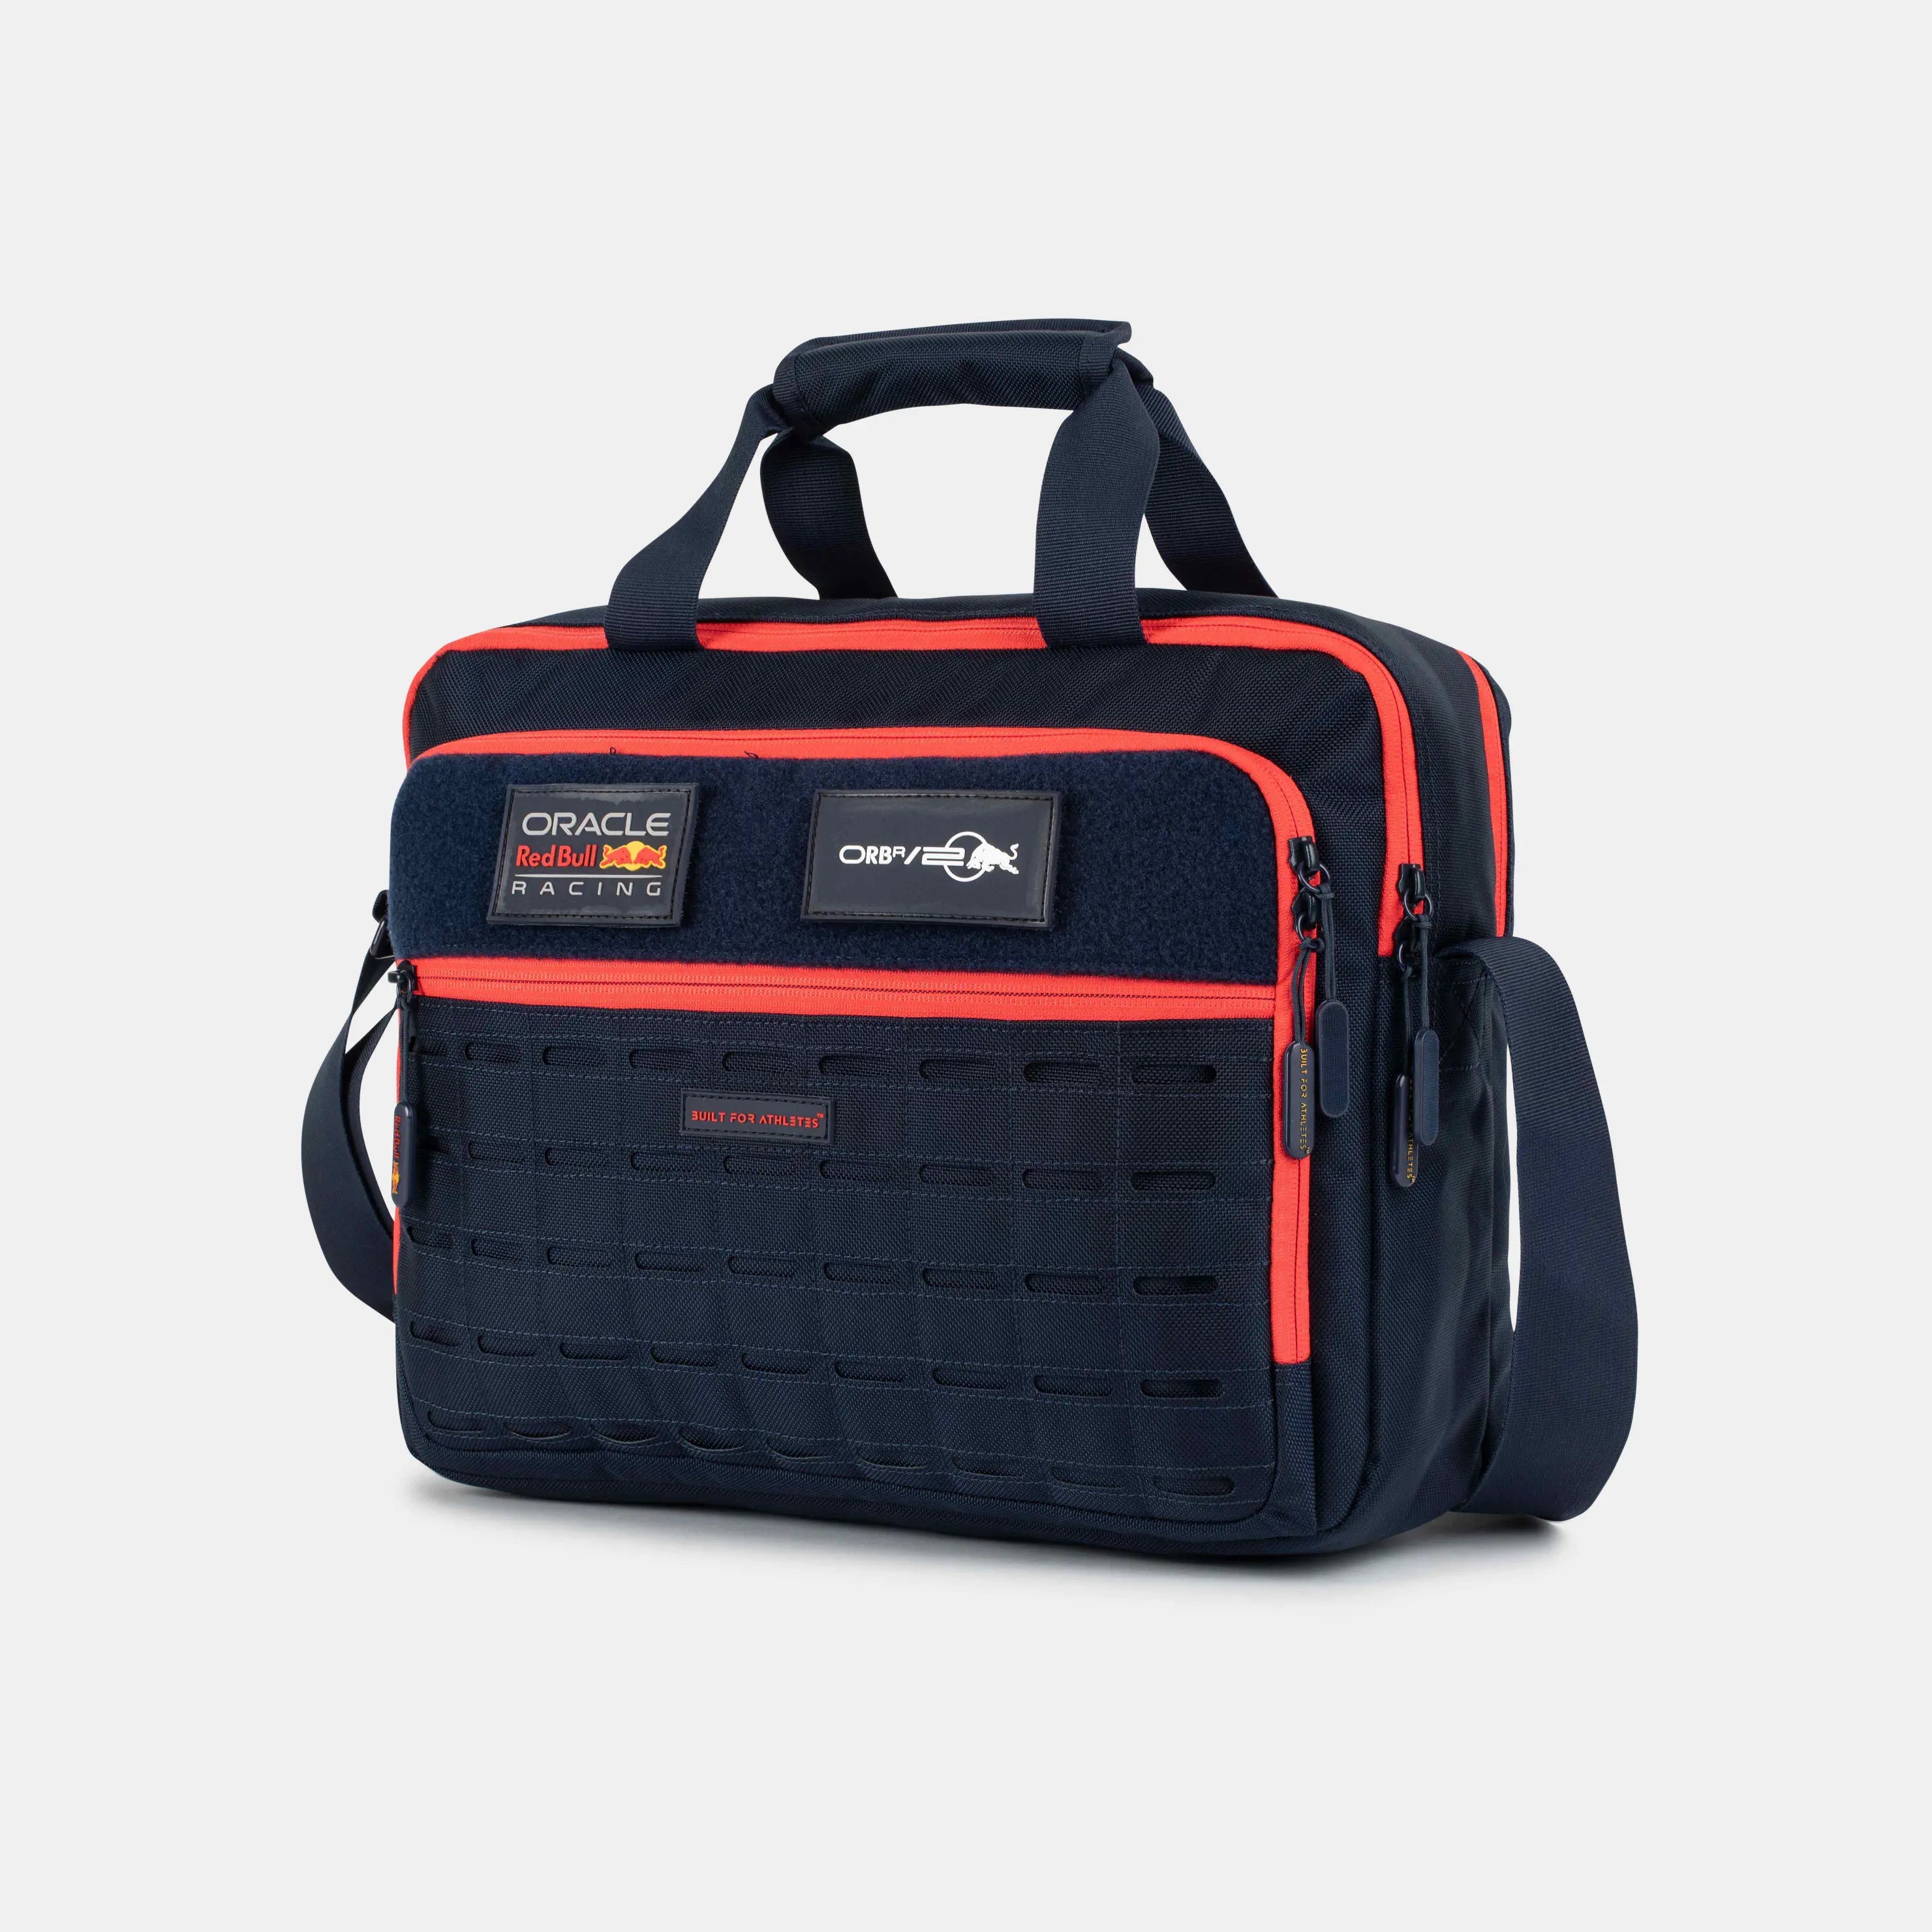 Built For Athletes Backpacks Red Bull Racing Laptop Bag